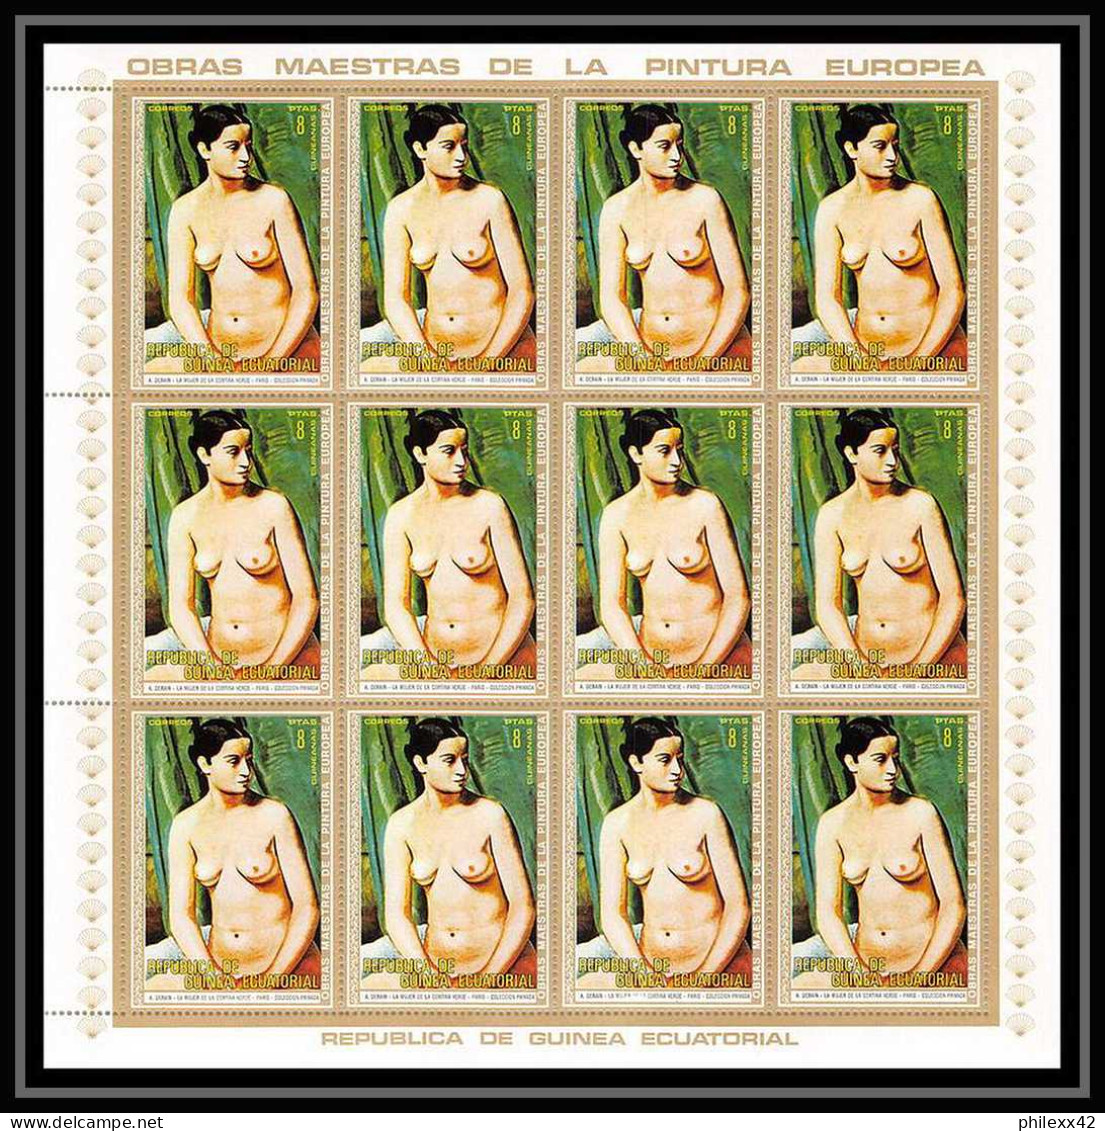 60005 neuf ** MNH Mi N°267/273 1973 pintura Tableau (Painting) nus nude Guinée équatoriale guinea feuilles sheets